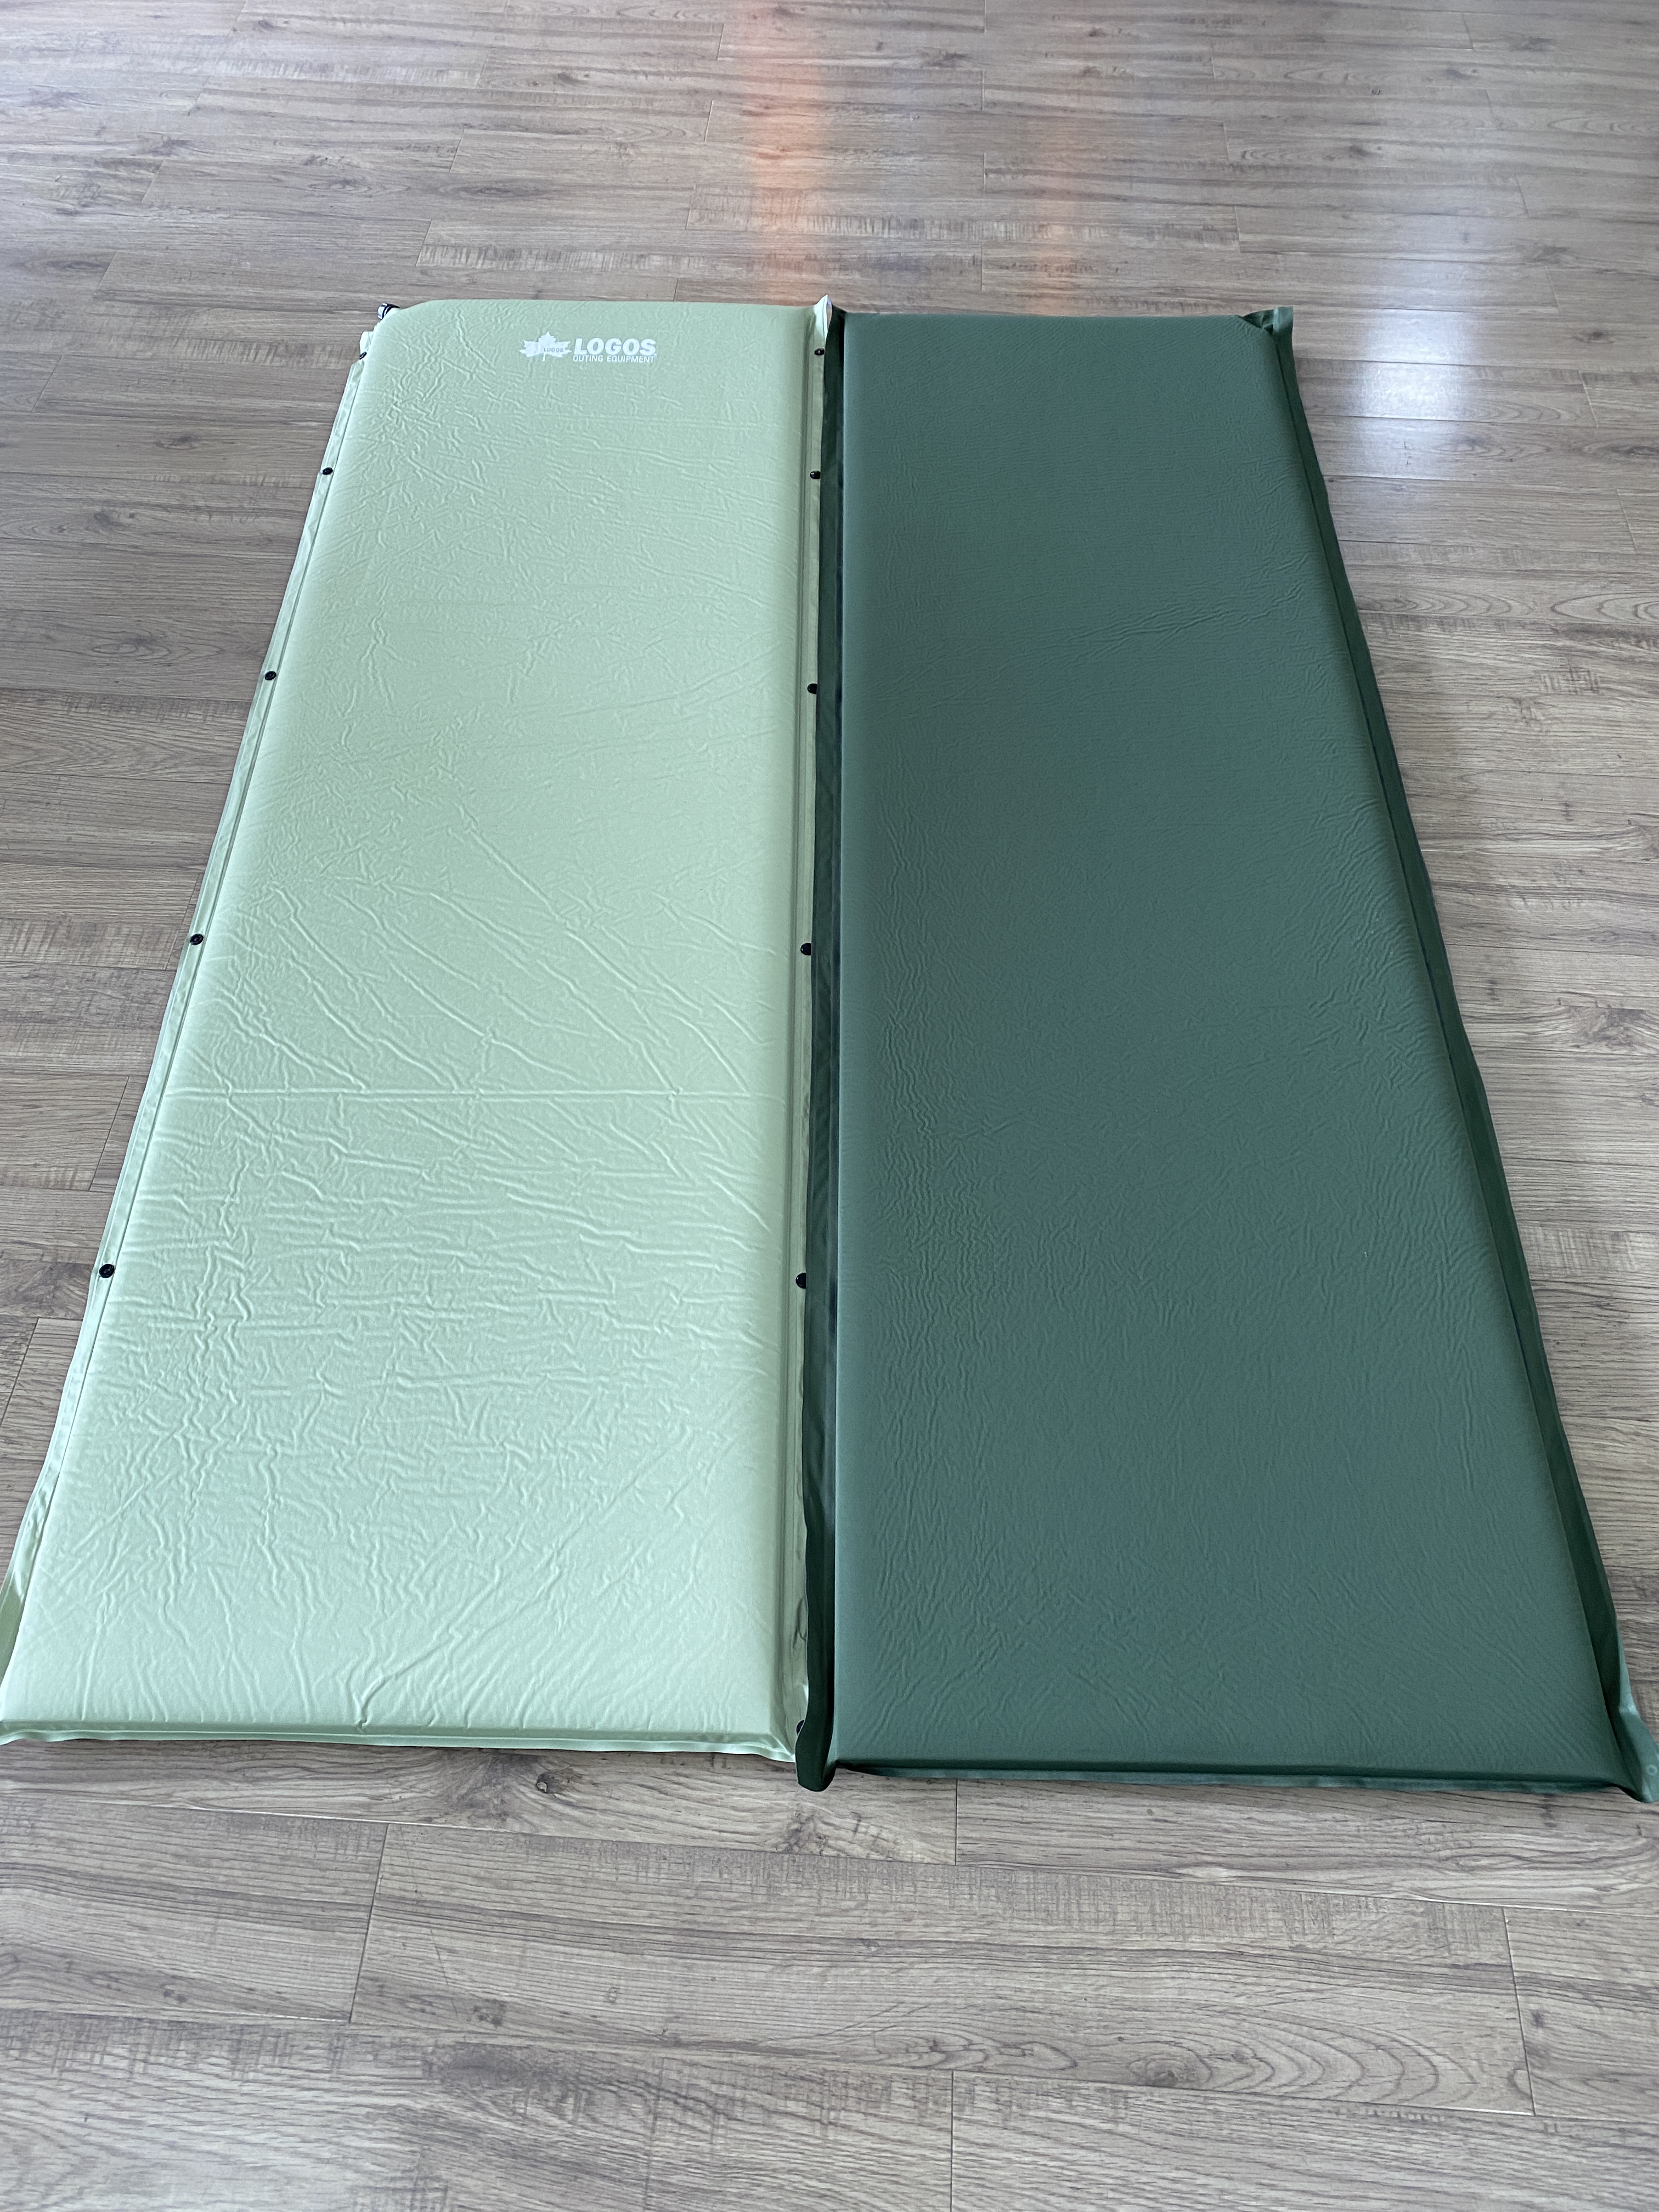 Self inflating mattress sleeping pad